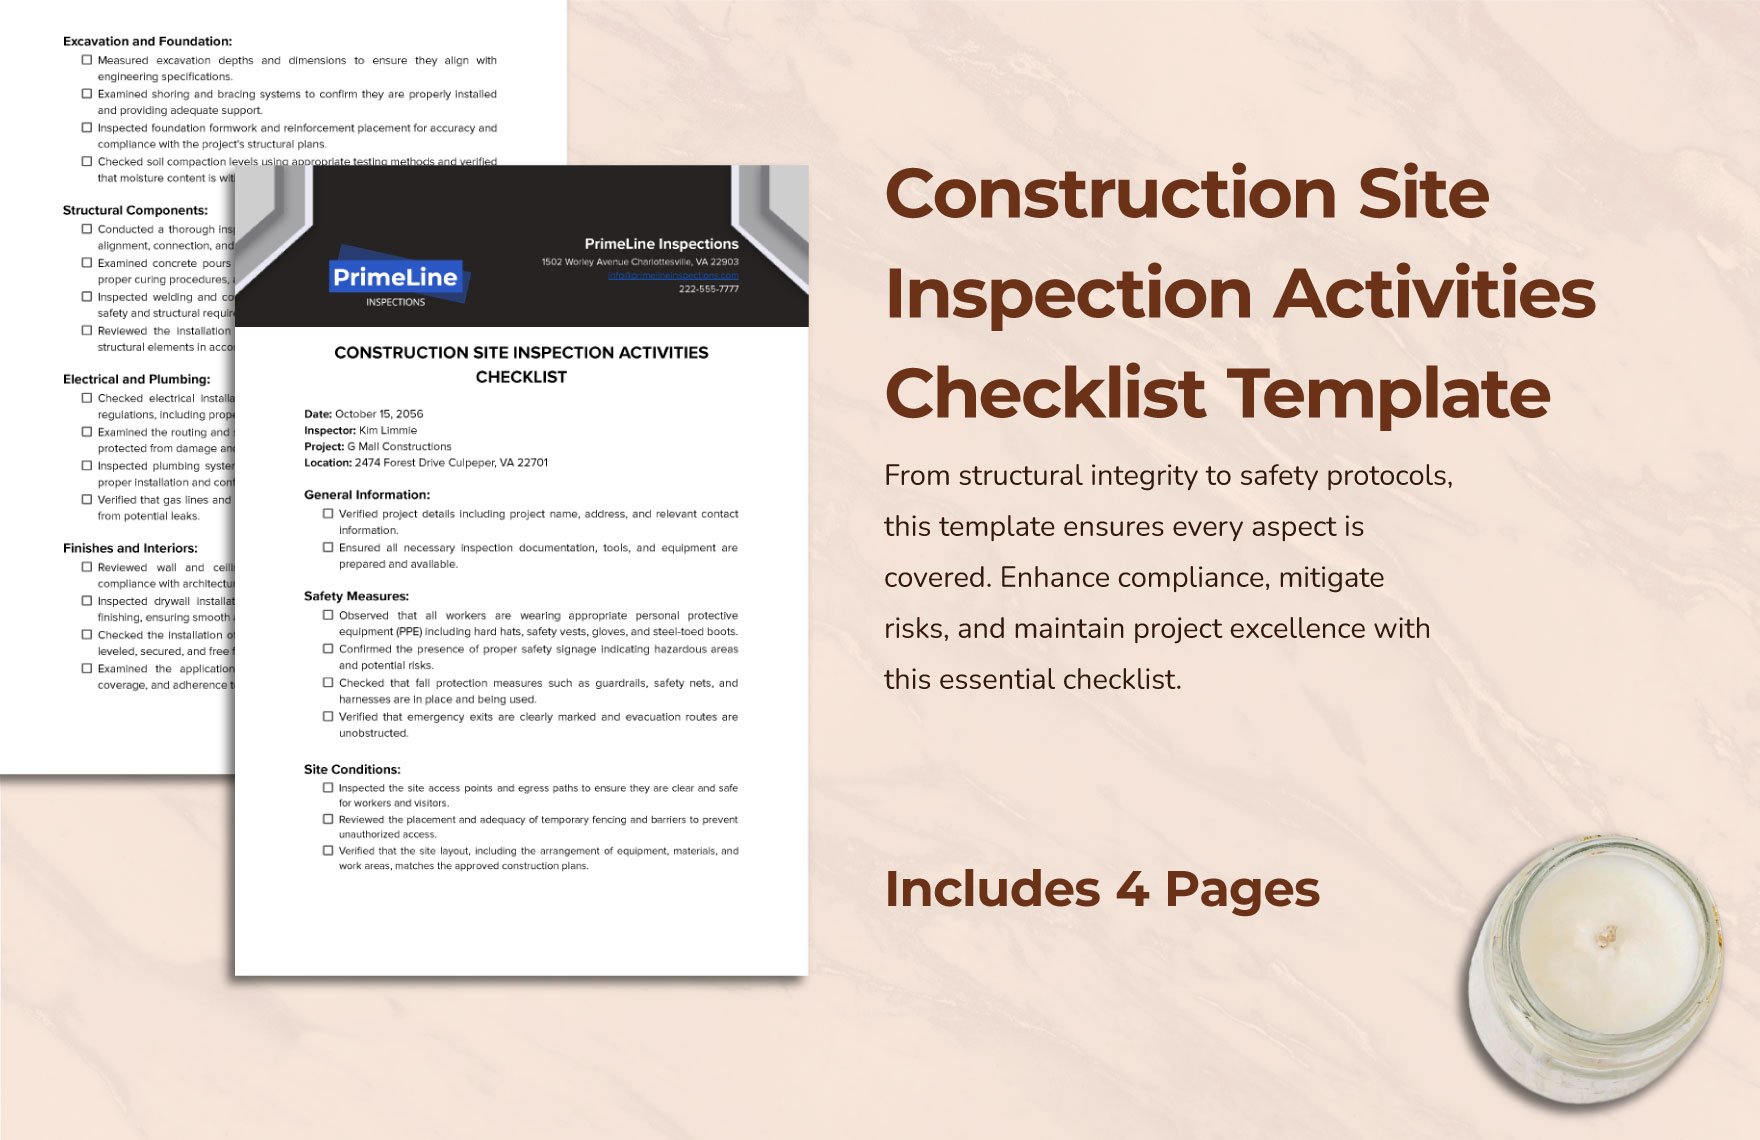 Construction Site Inspection Activities Checklist Template